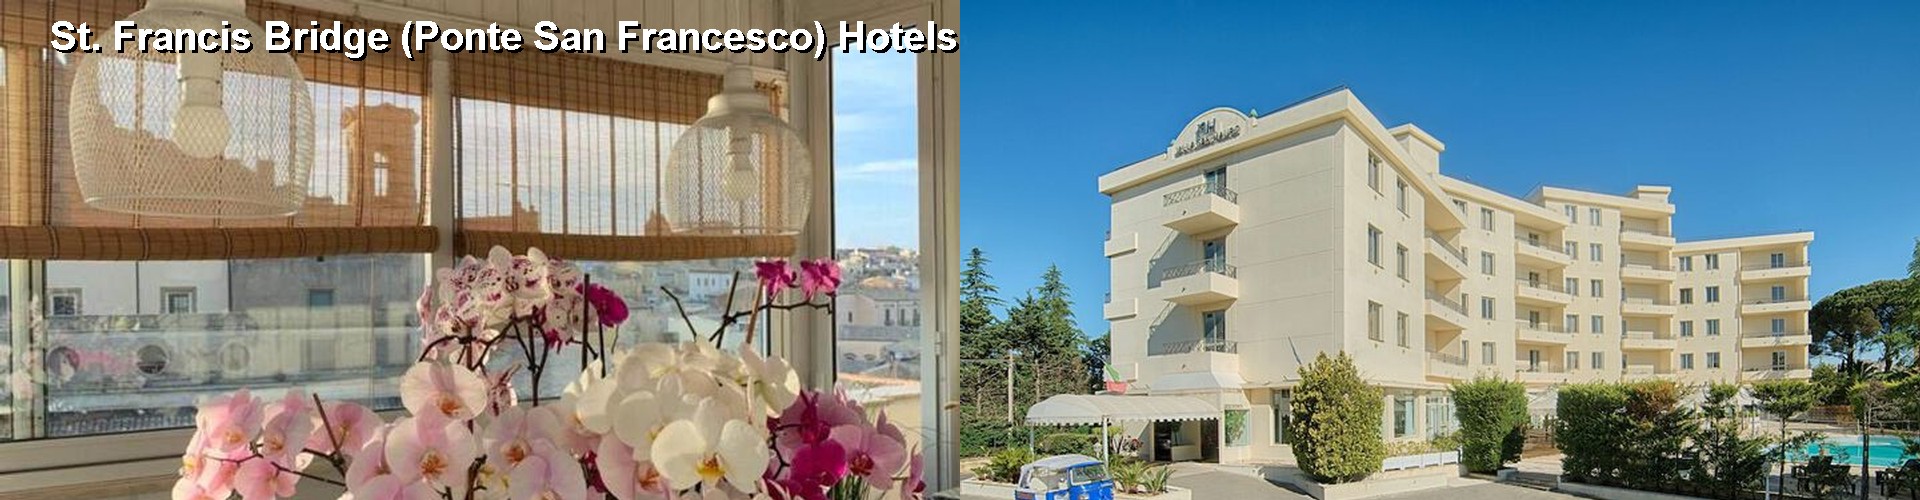 5 Best Hotels near St. Francis Bridge (Ponte San Francesco)